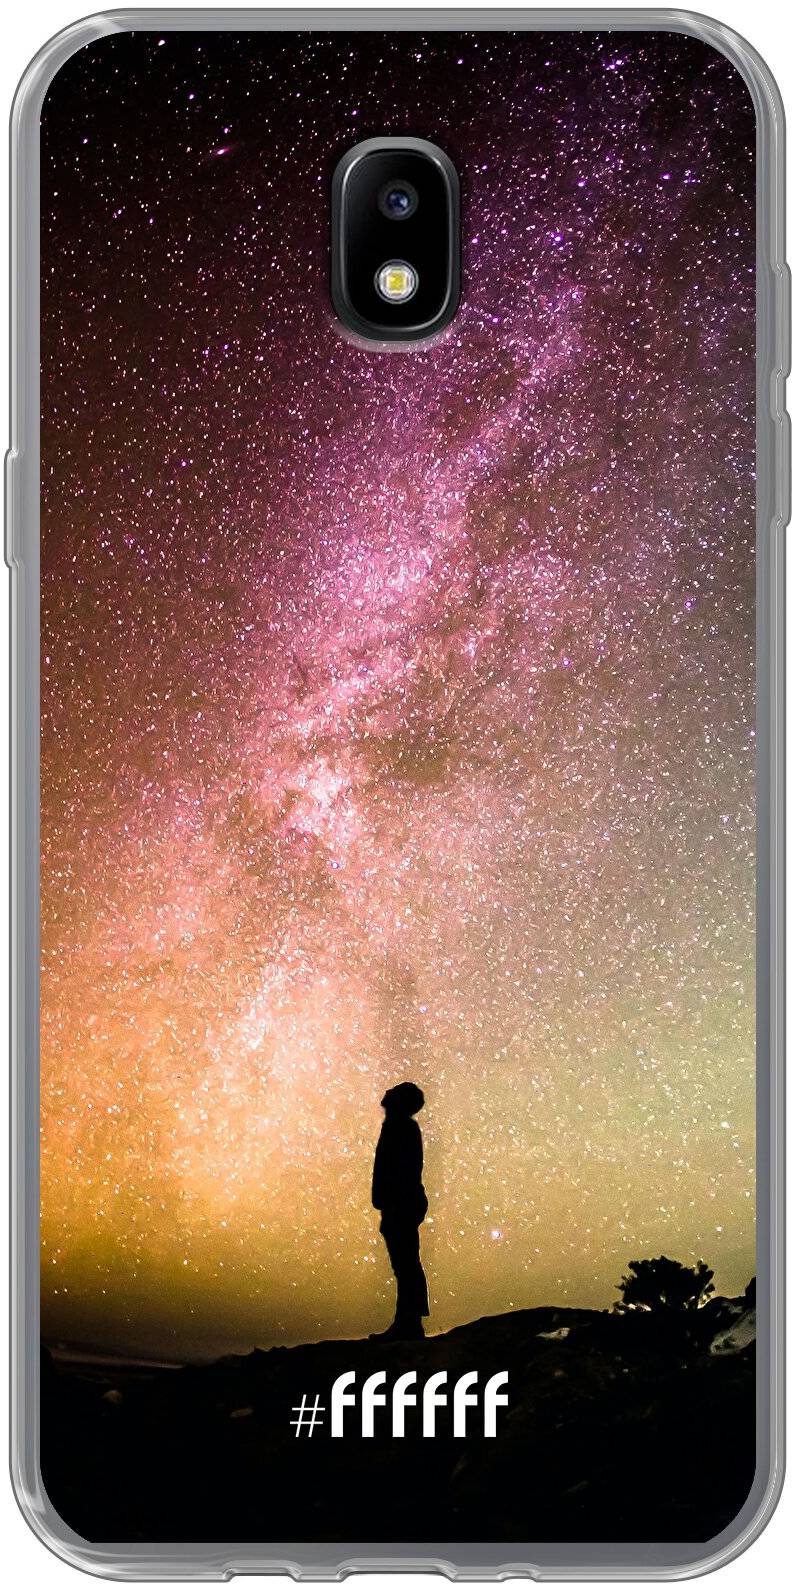 Watching the Stars Galaxy J5 (2017)